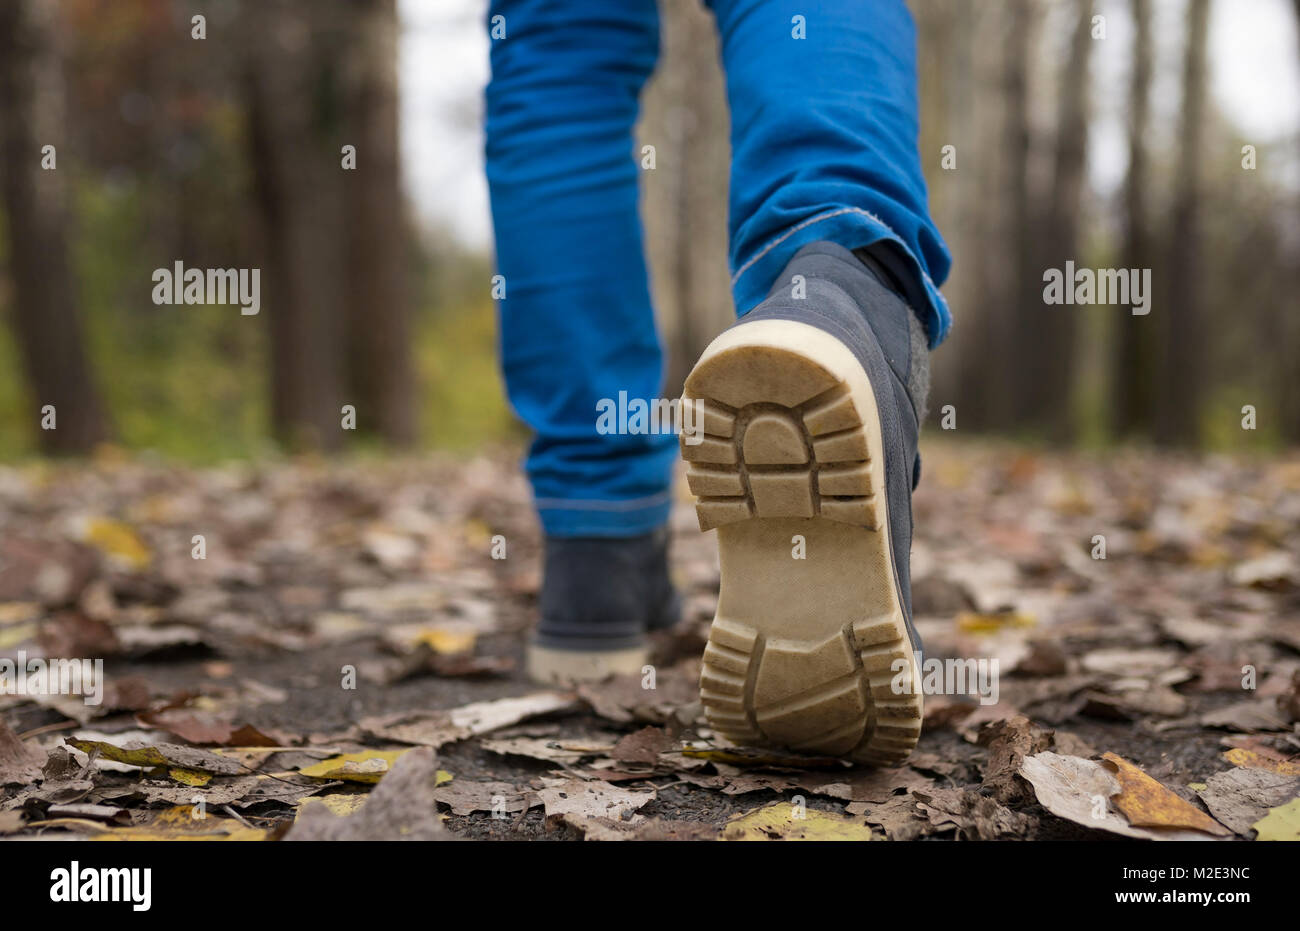 Sole of shoe of Caucasian boy walking on autumn leaves Stock Photo